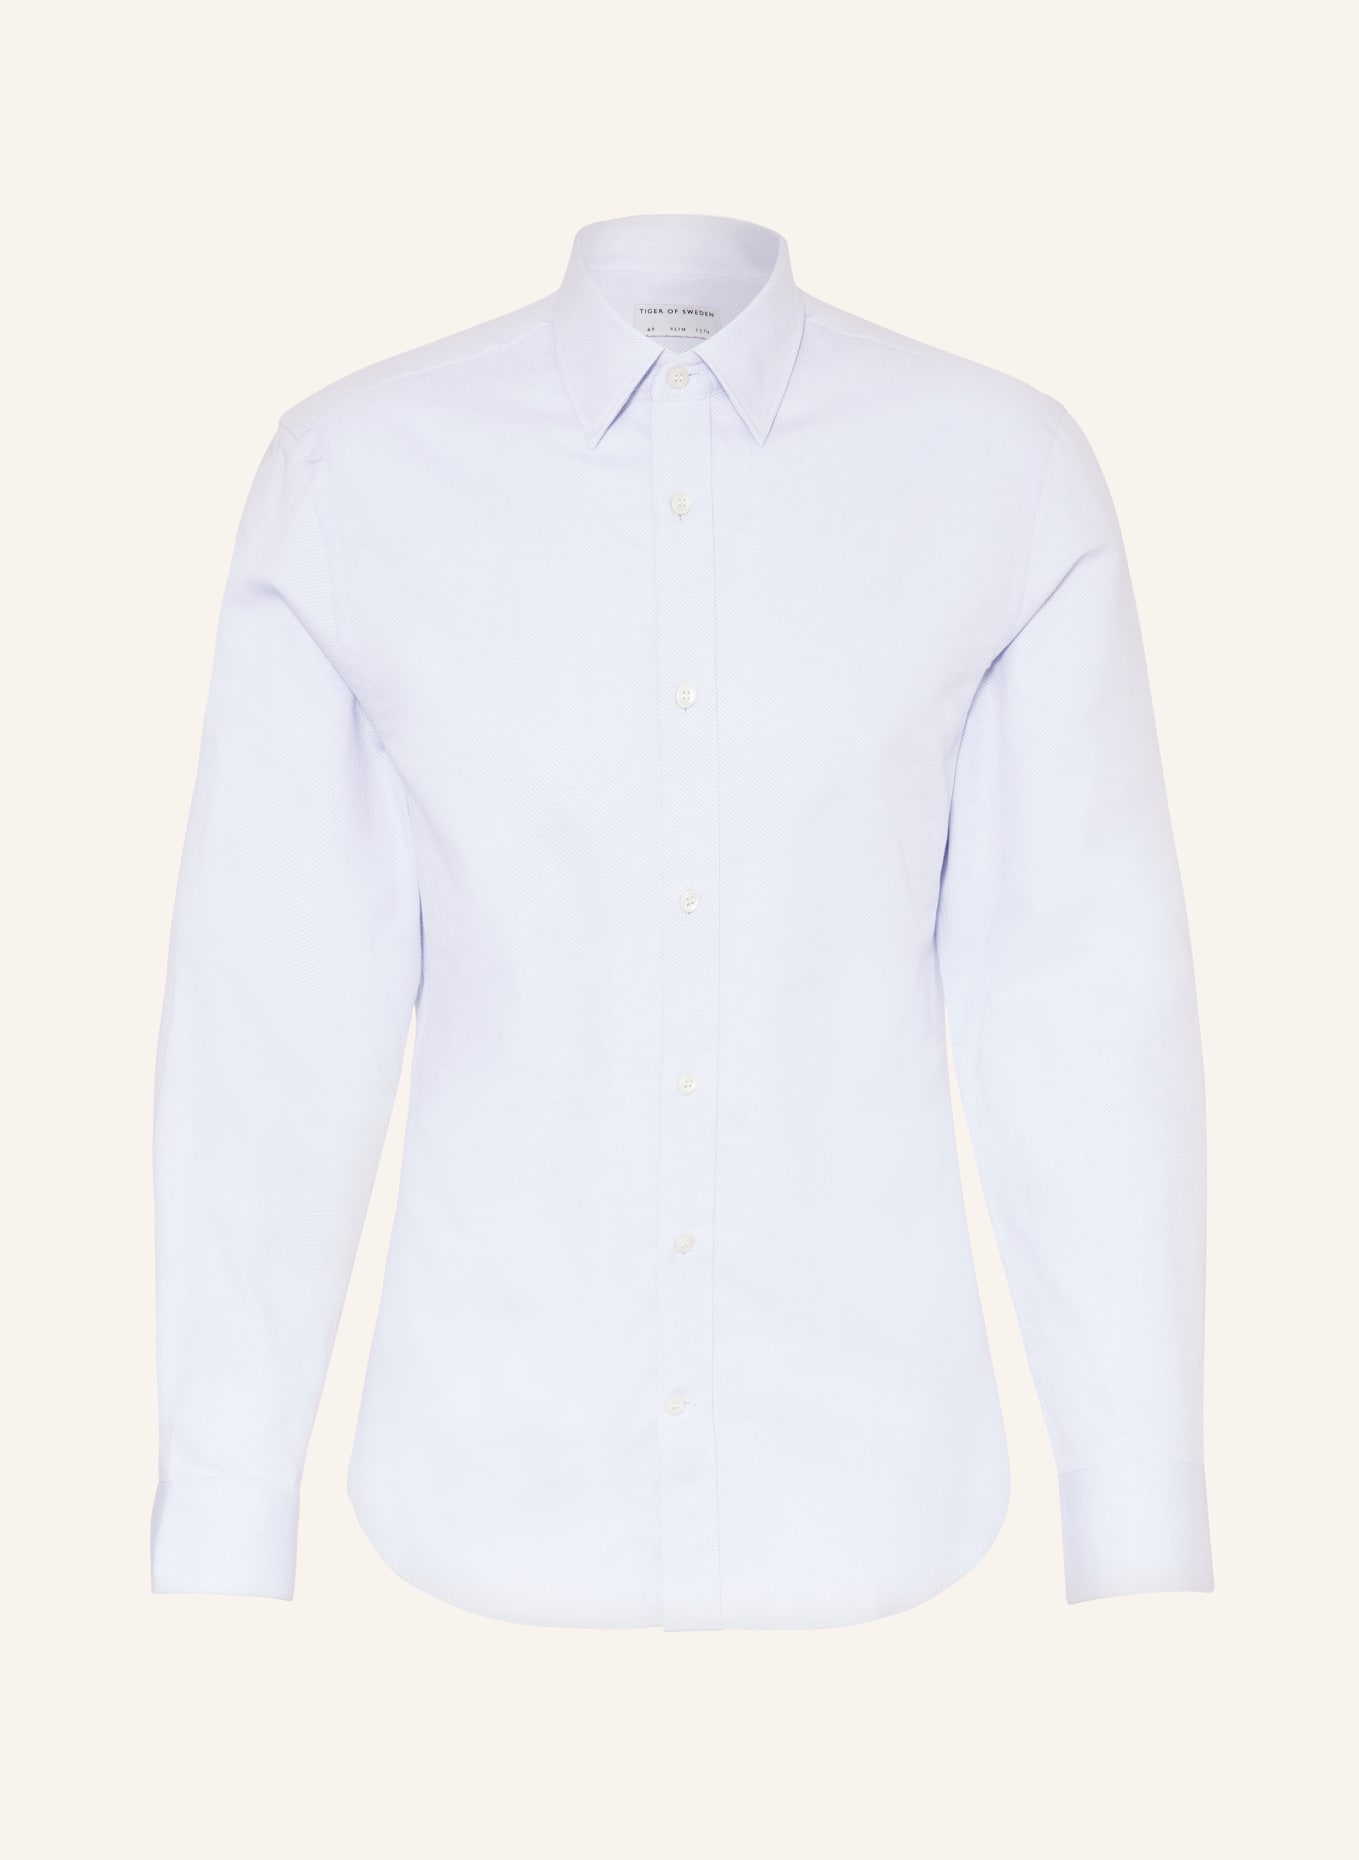 TIGER OF SWEDEN Hemd ADLEY Slim Fit, Farbe: HELLBLAU (Bild 1)